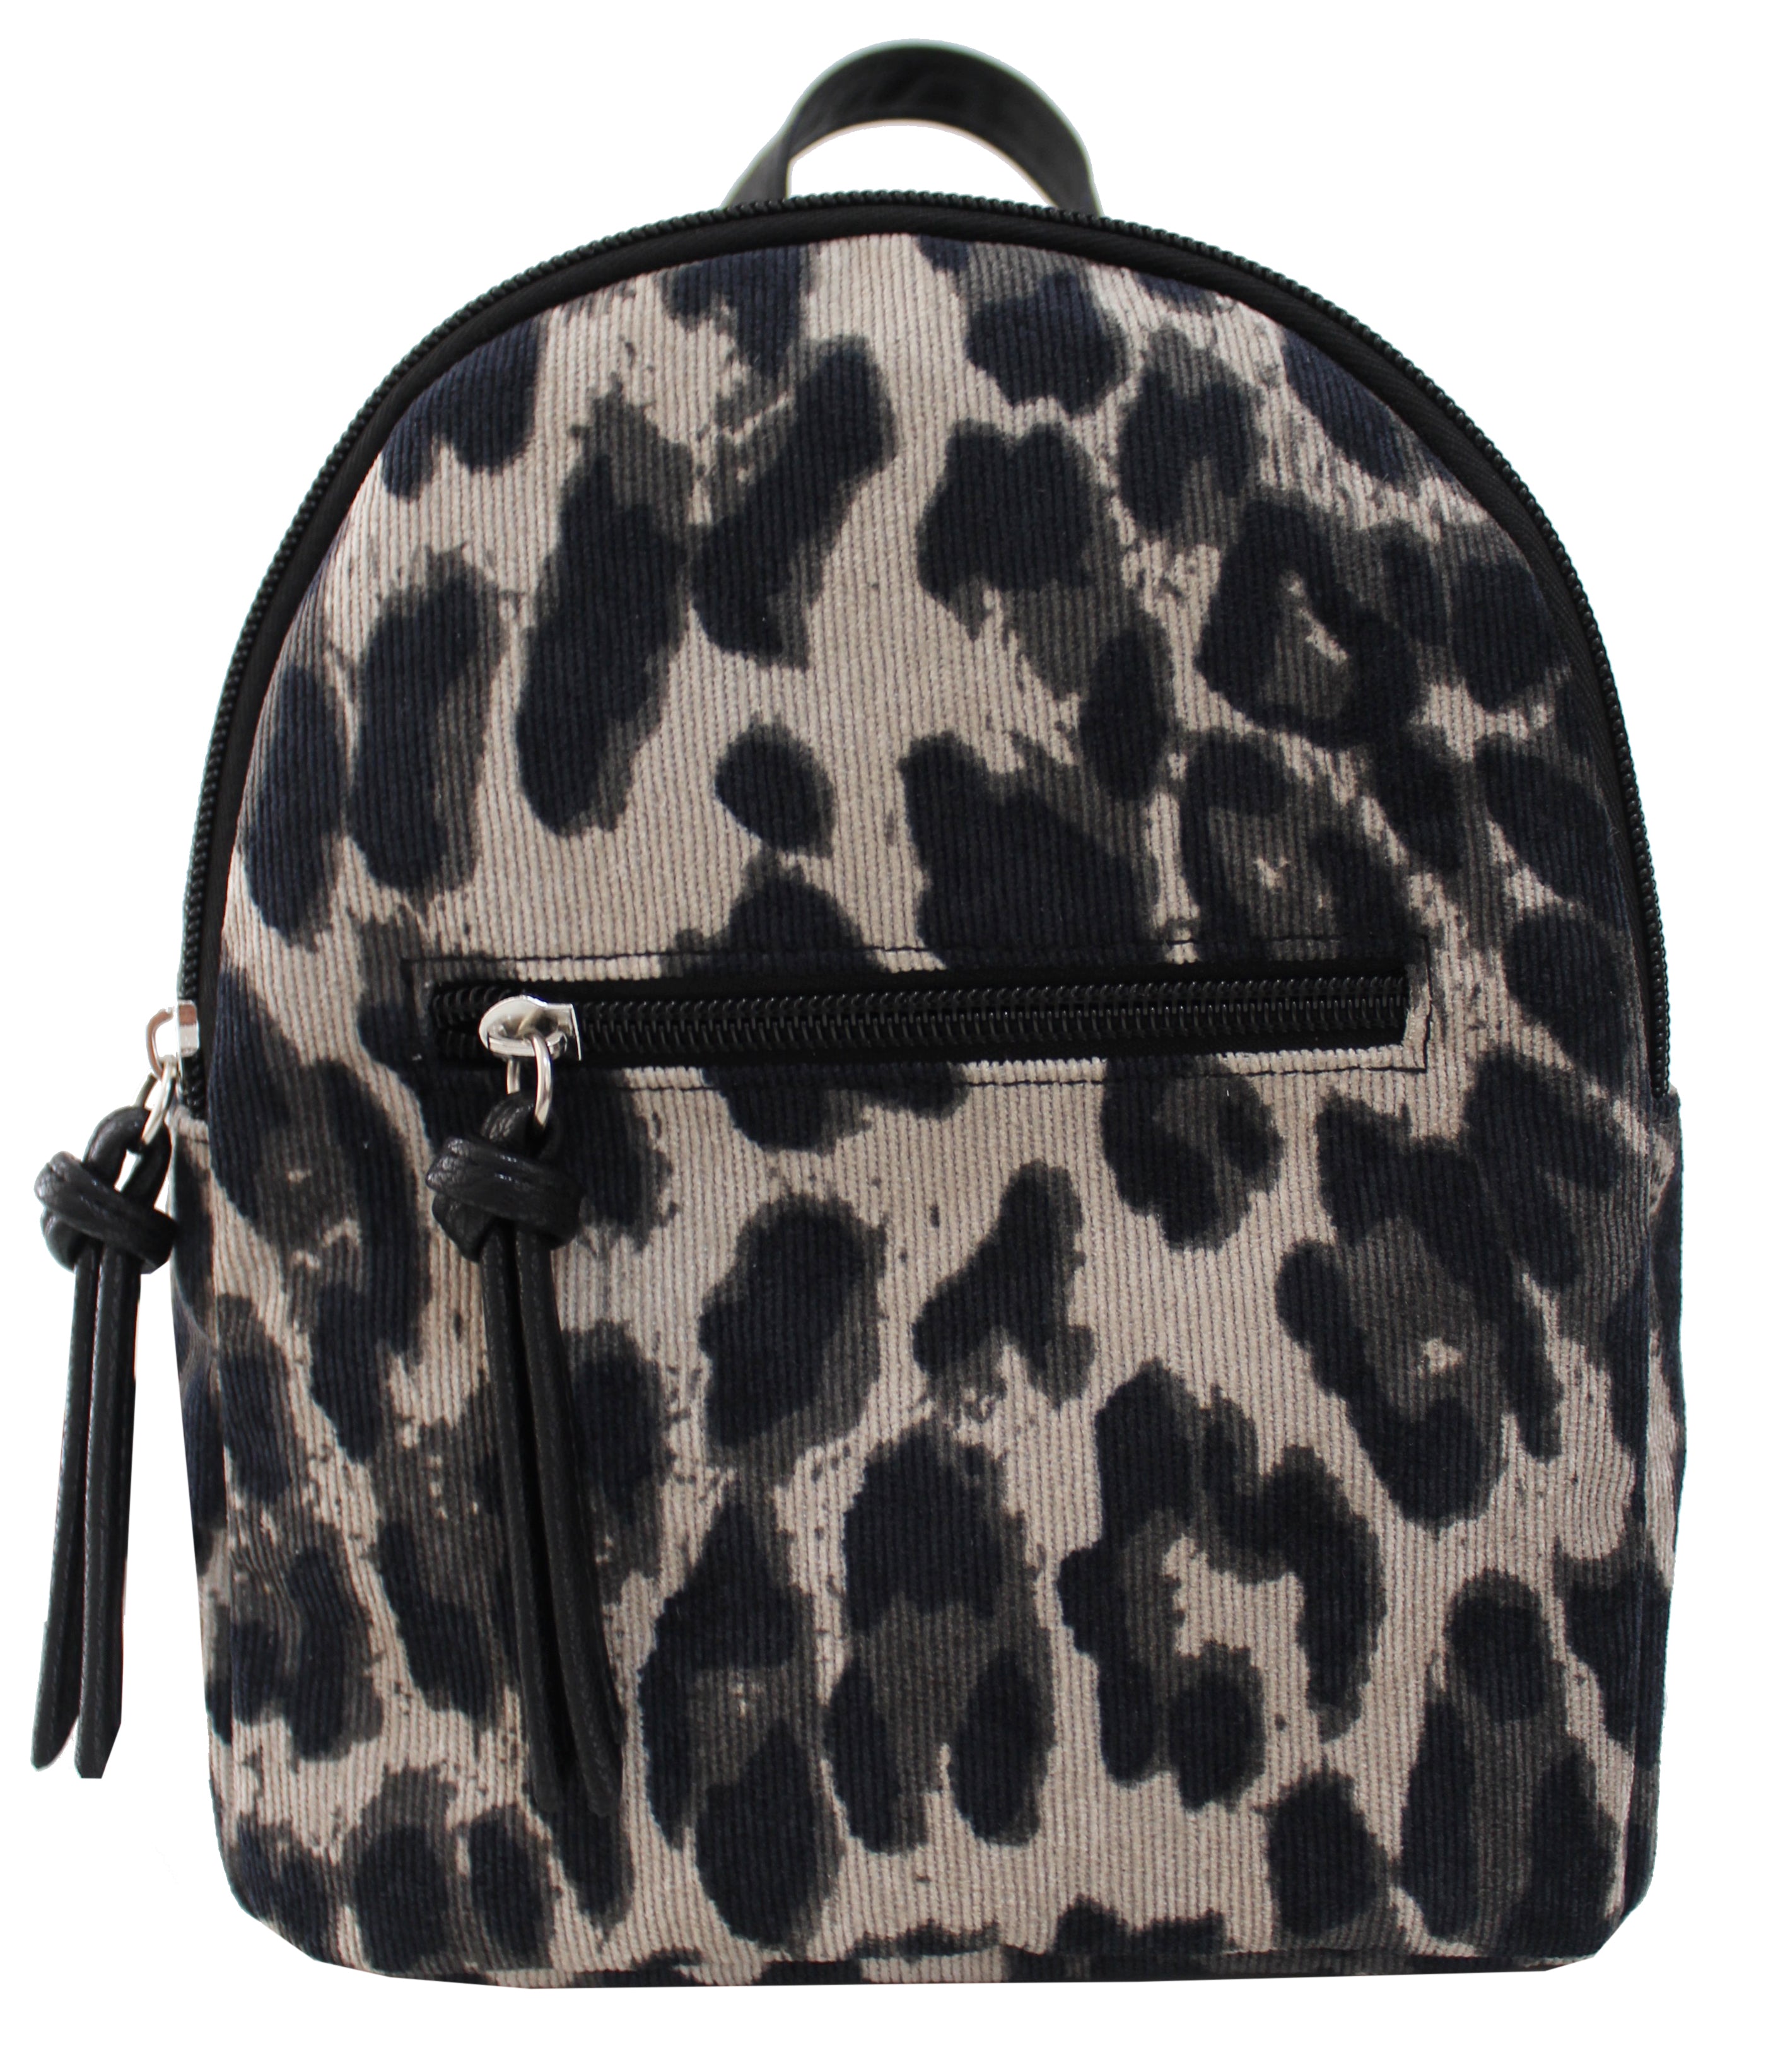 Leopard print backpack school - Gem